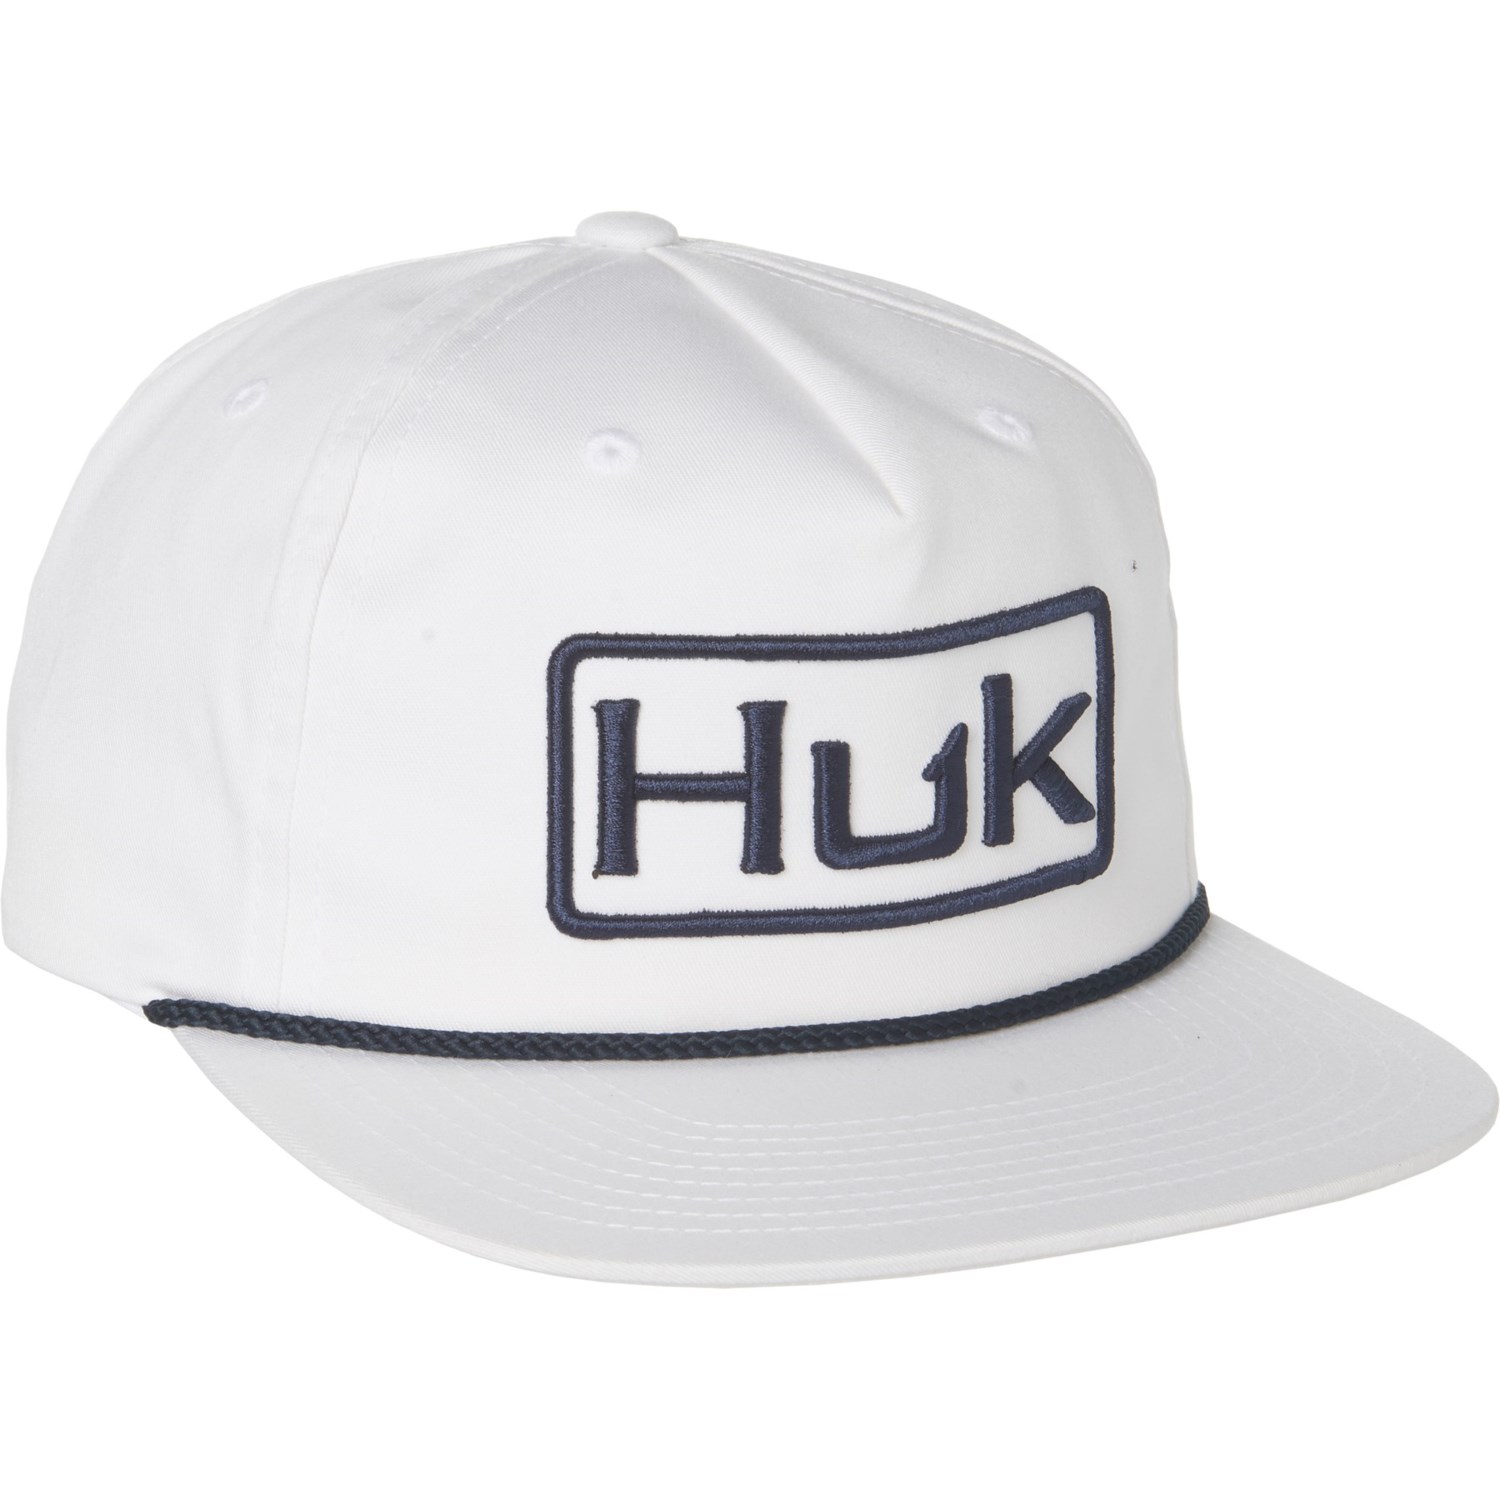 Huk Fishing Hat - Shop on Pinterest